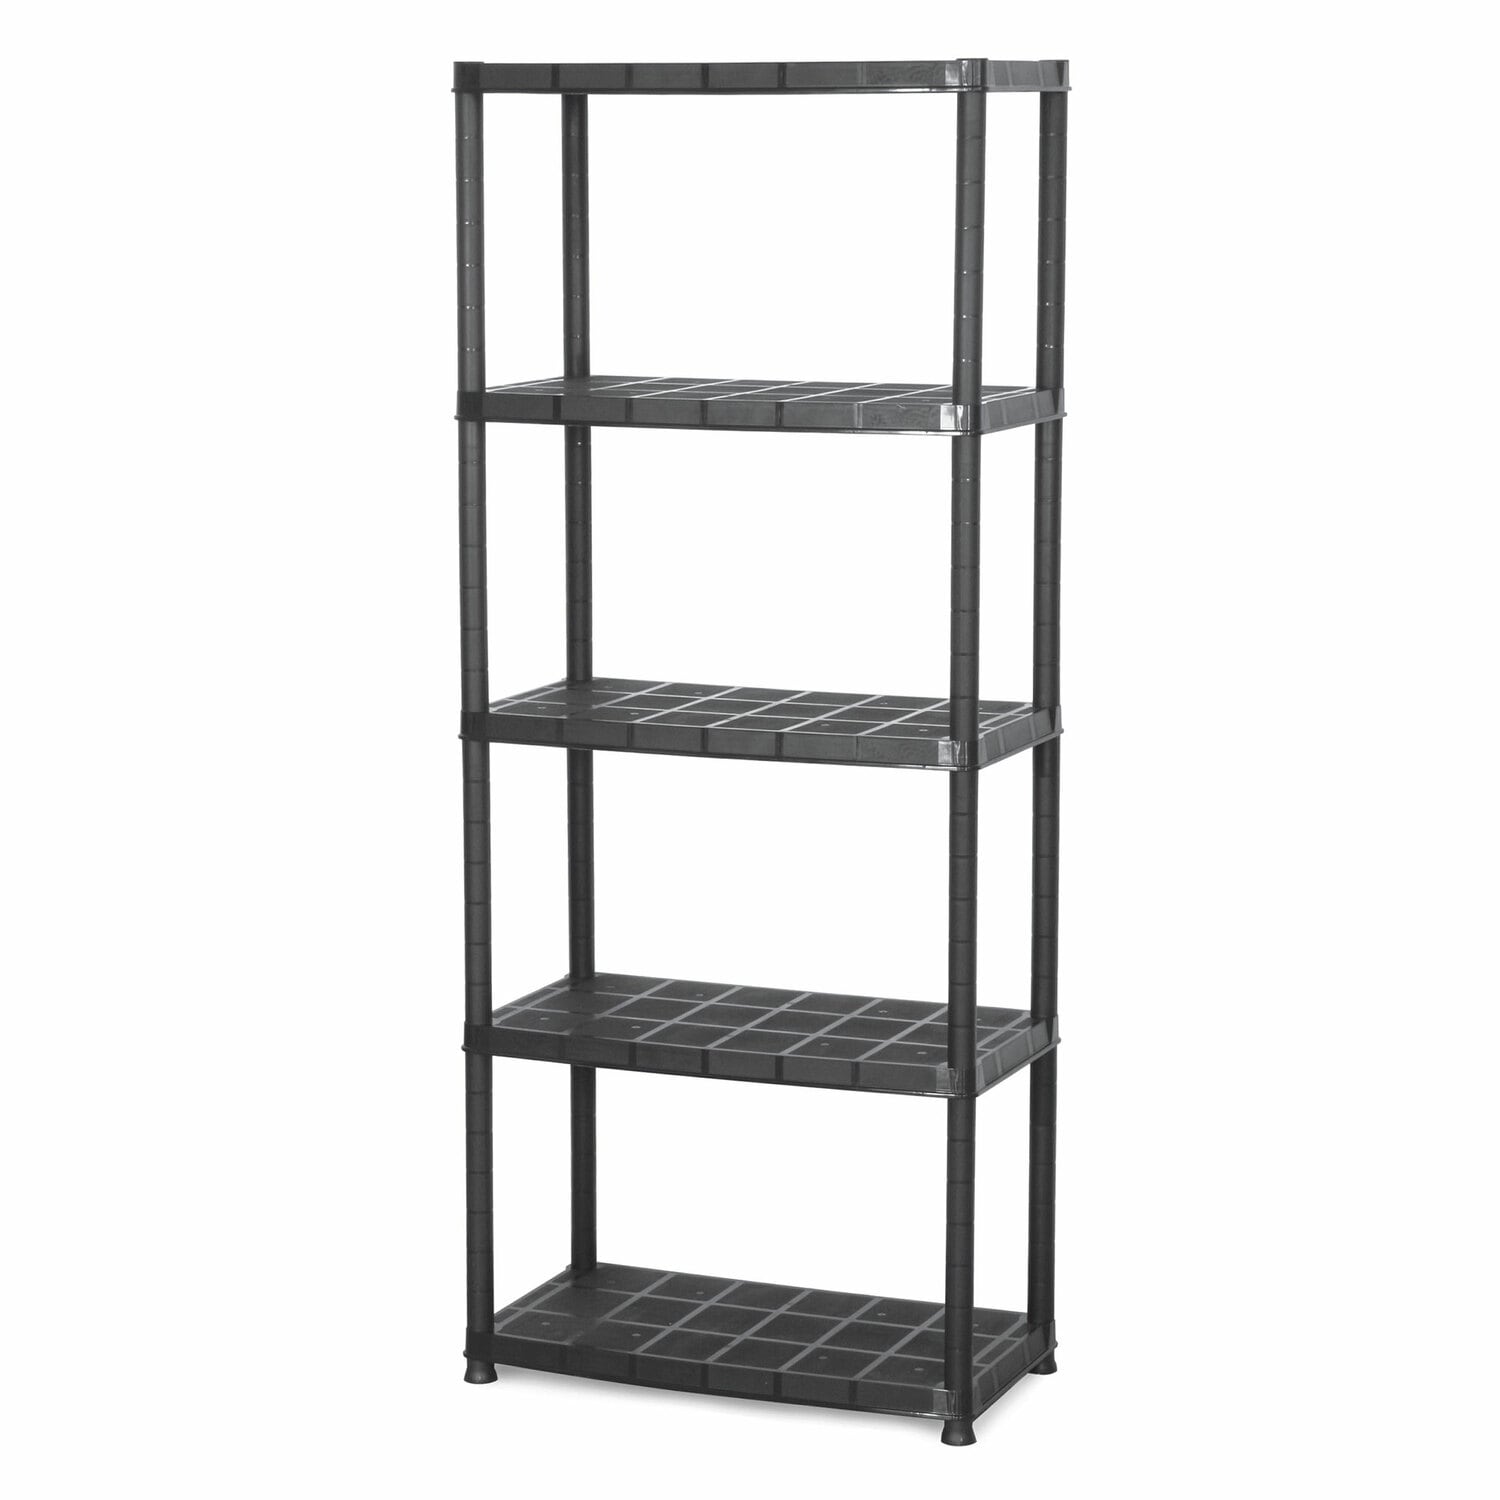 Ram Quality Products Black Plastic 5-Shelf Bookcase (15-in W x 60